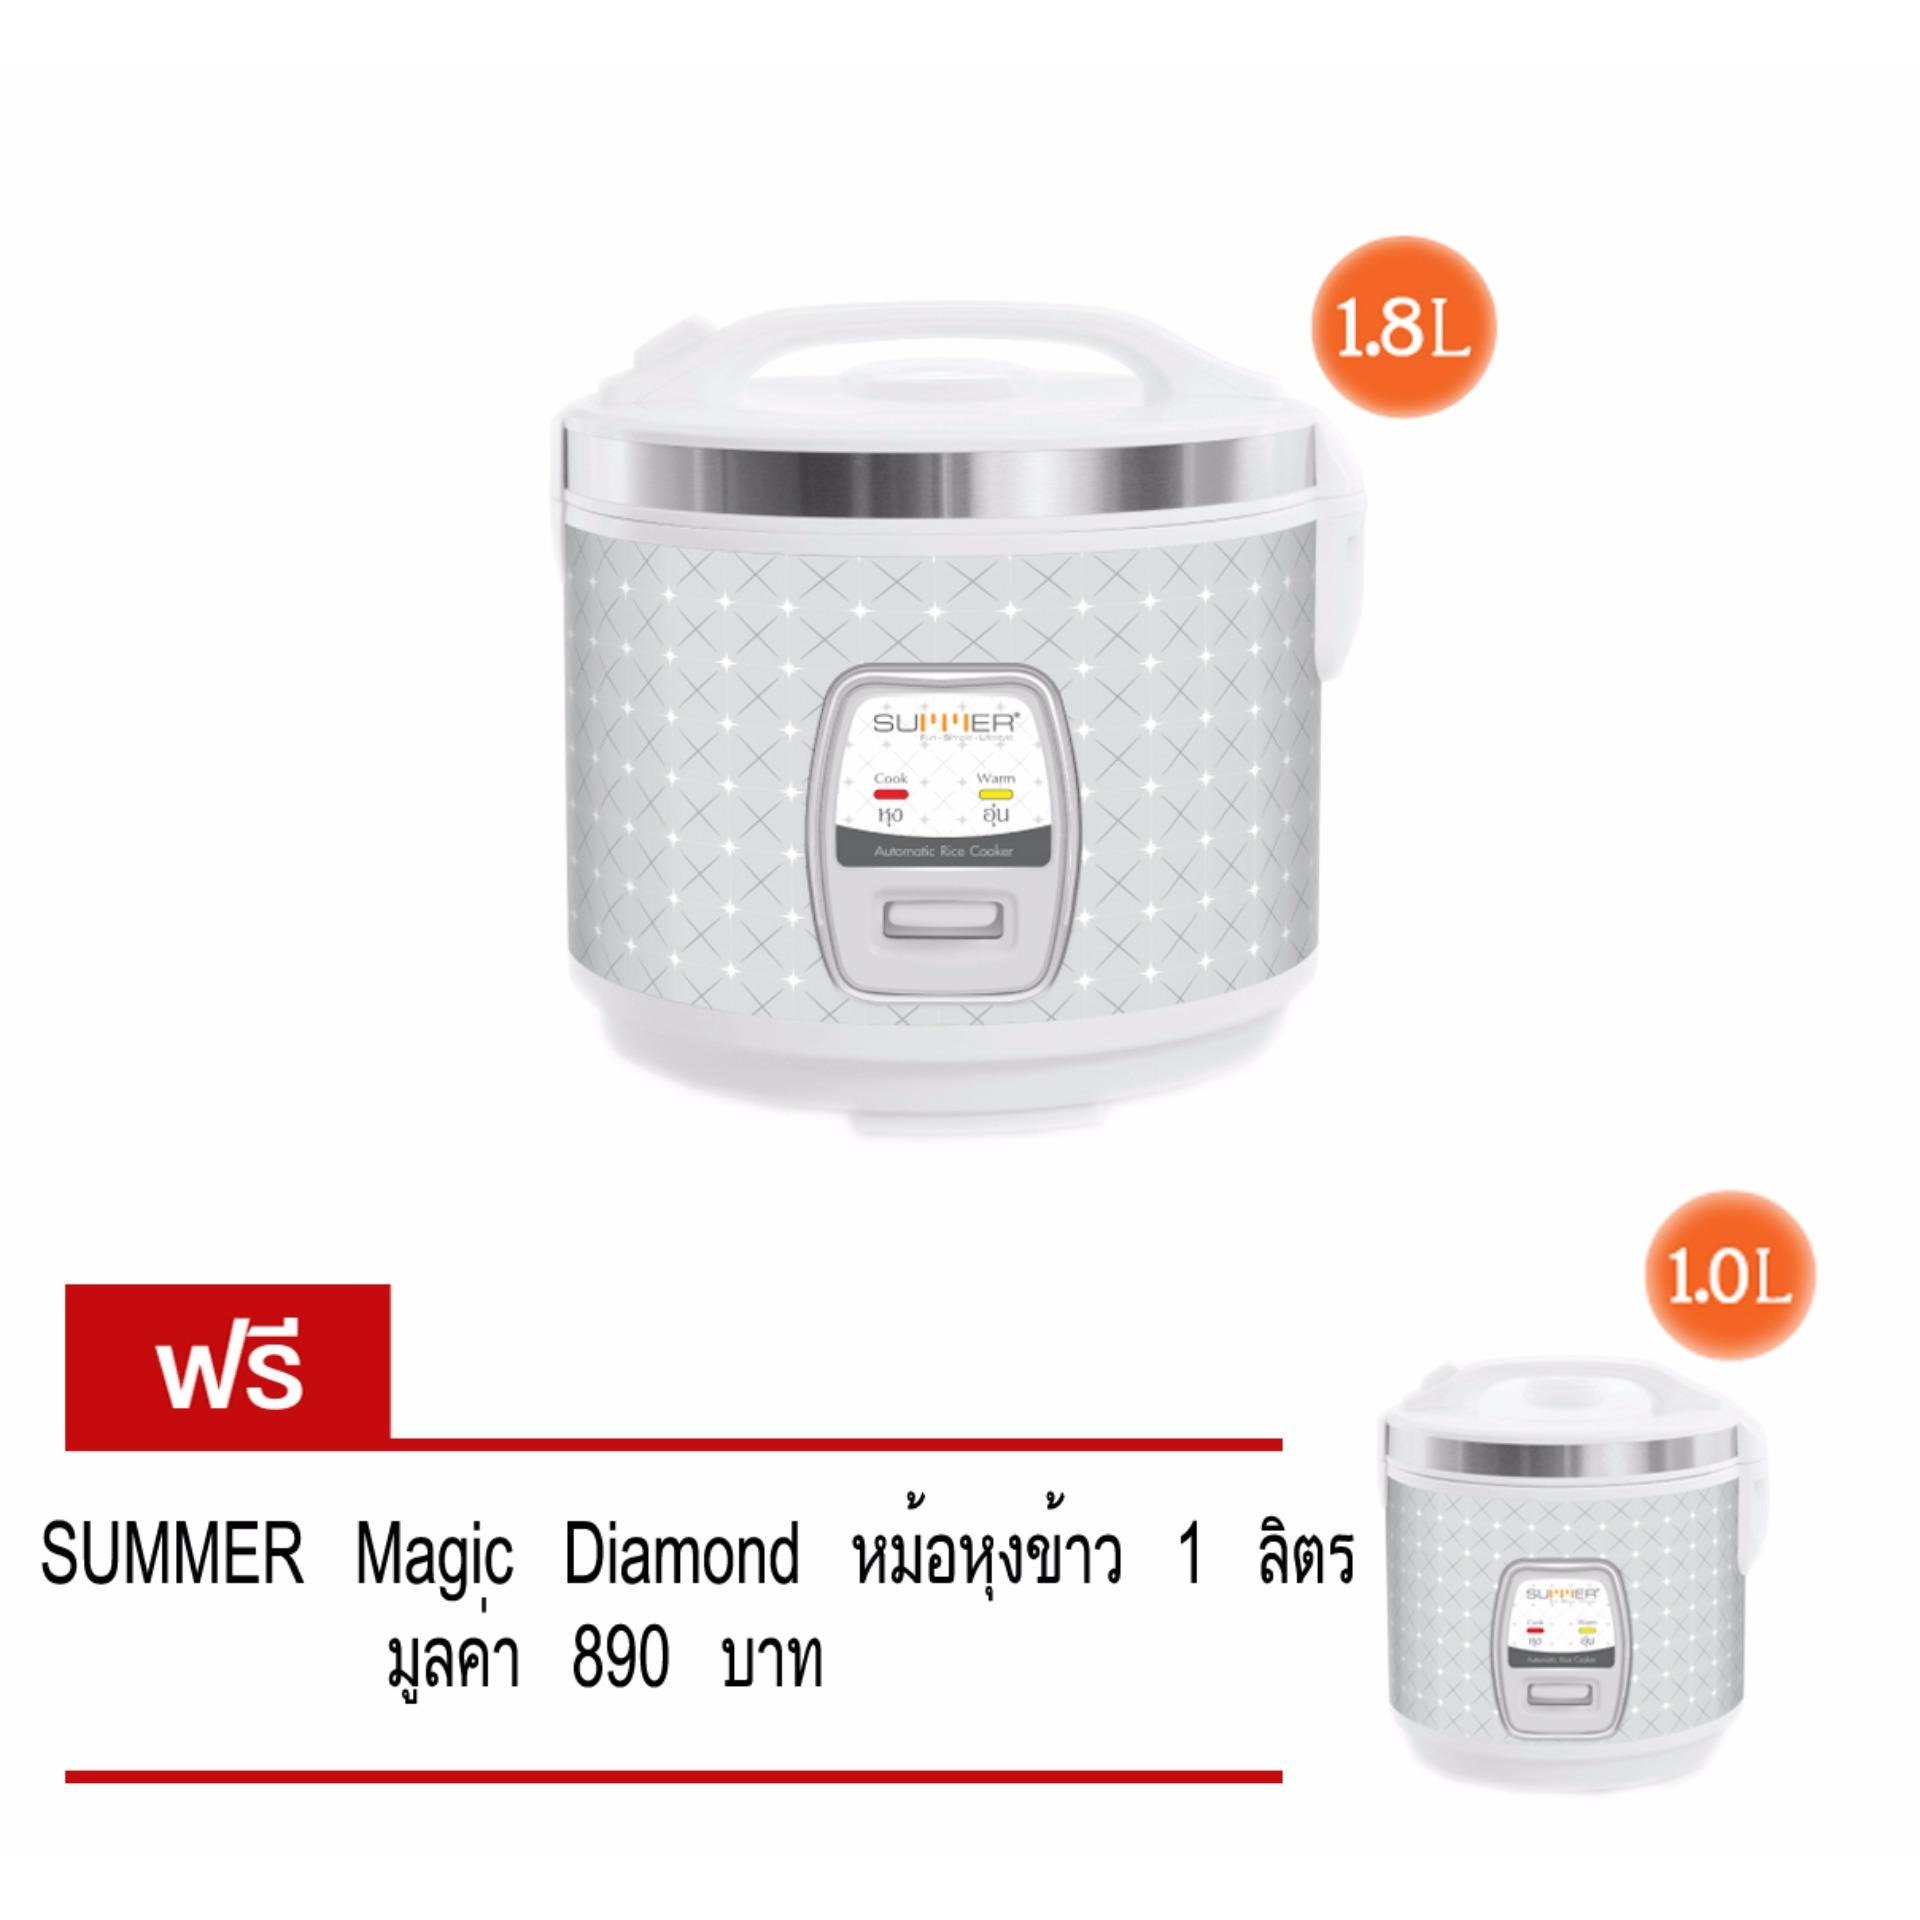 SUMMER Magic Diamond หม้อหุงข้าว 1.8 ลิตร แถมฟรี Magic Diamond หม้อหุงข้าว 1.0 ลิตร